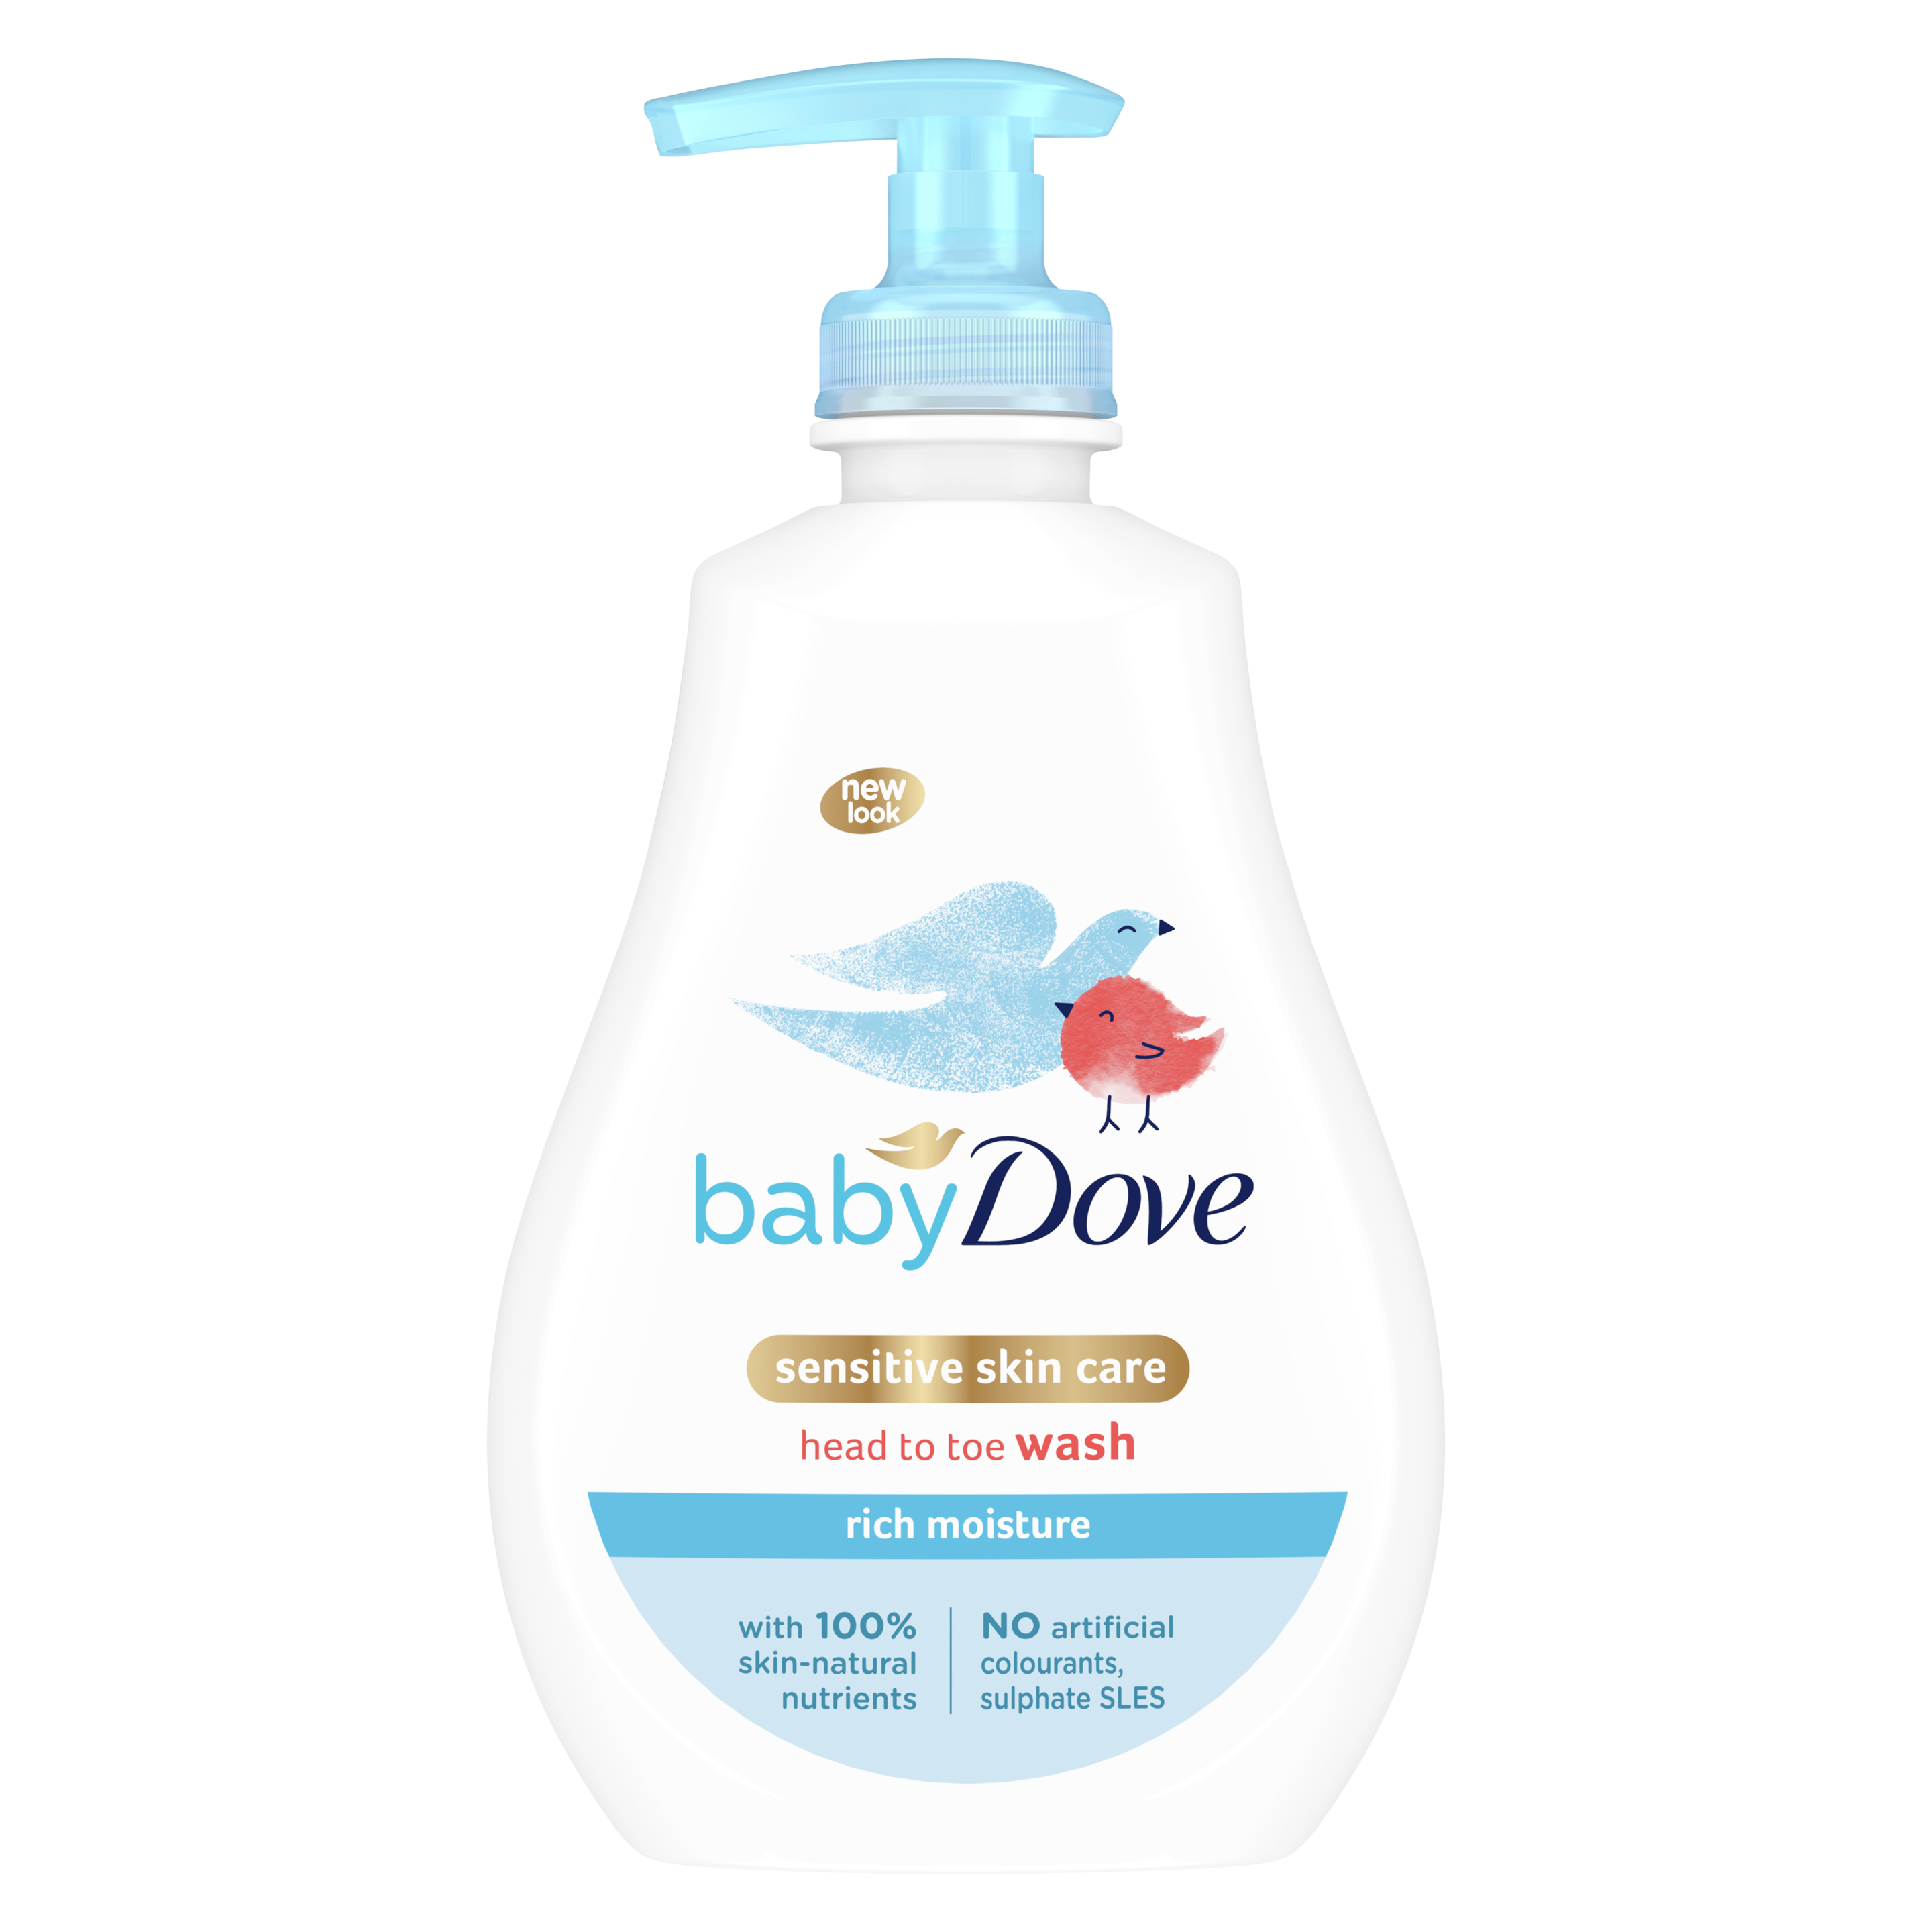 Baby Dove Rich Moisture Head to Toe Wash 400ml